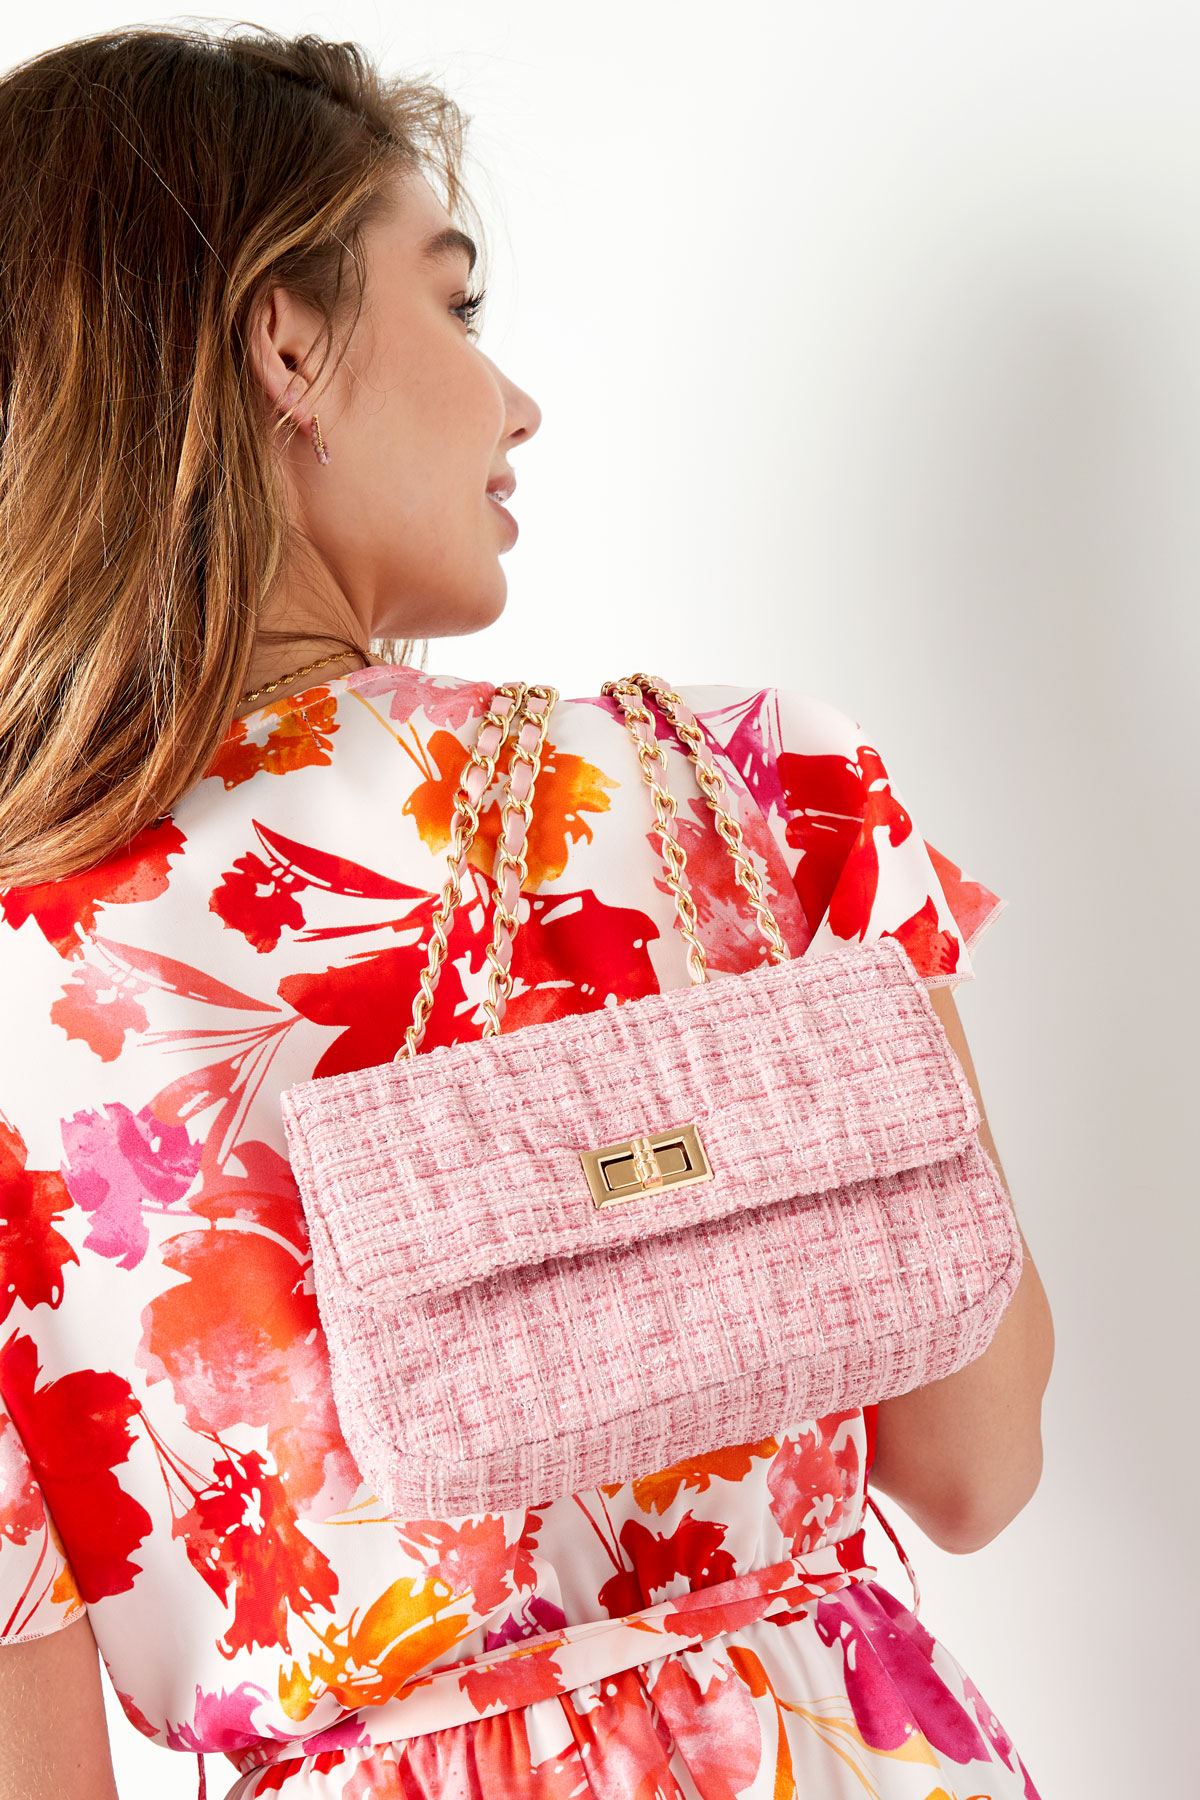 Dikişli ve altın detaylı çanta - pembe Pink Polyester Resim2